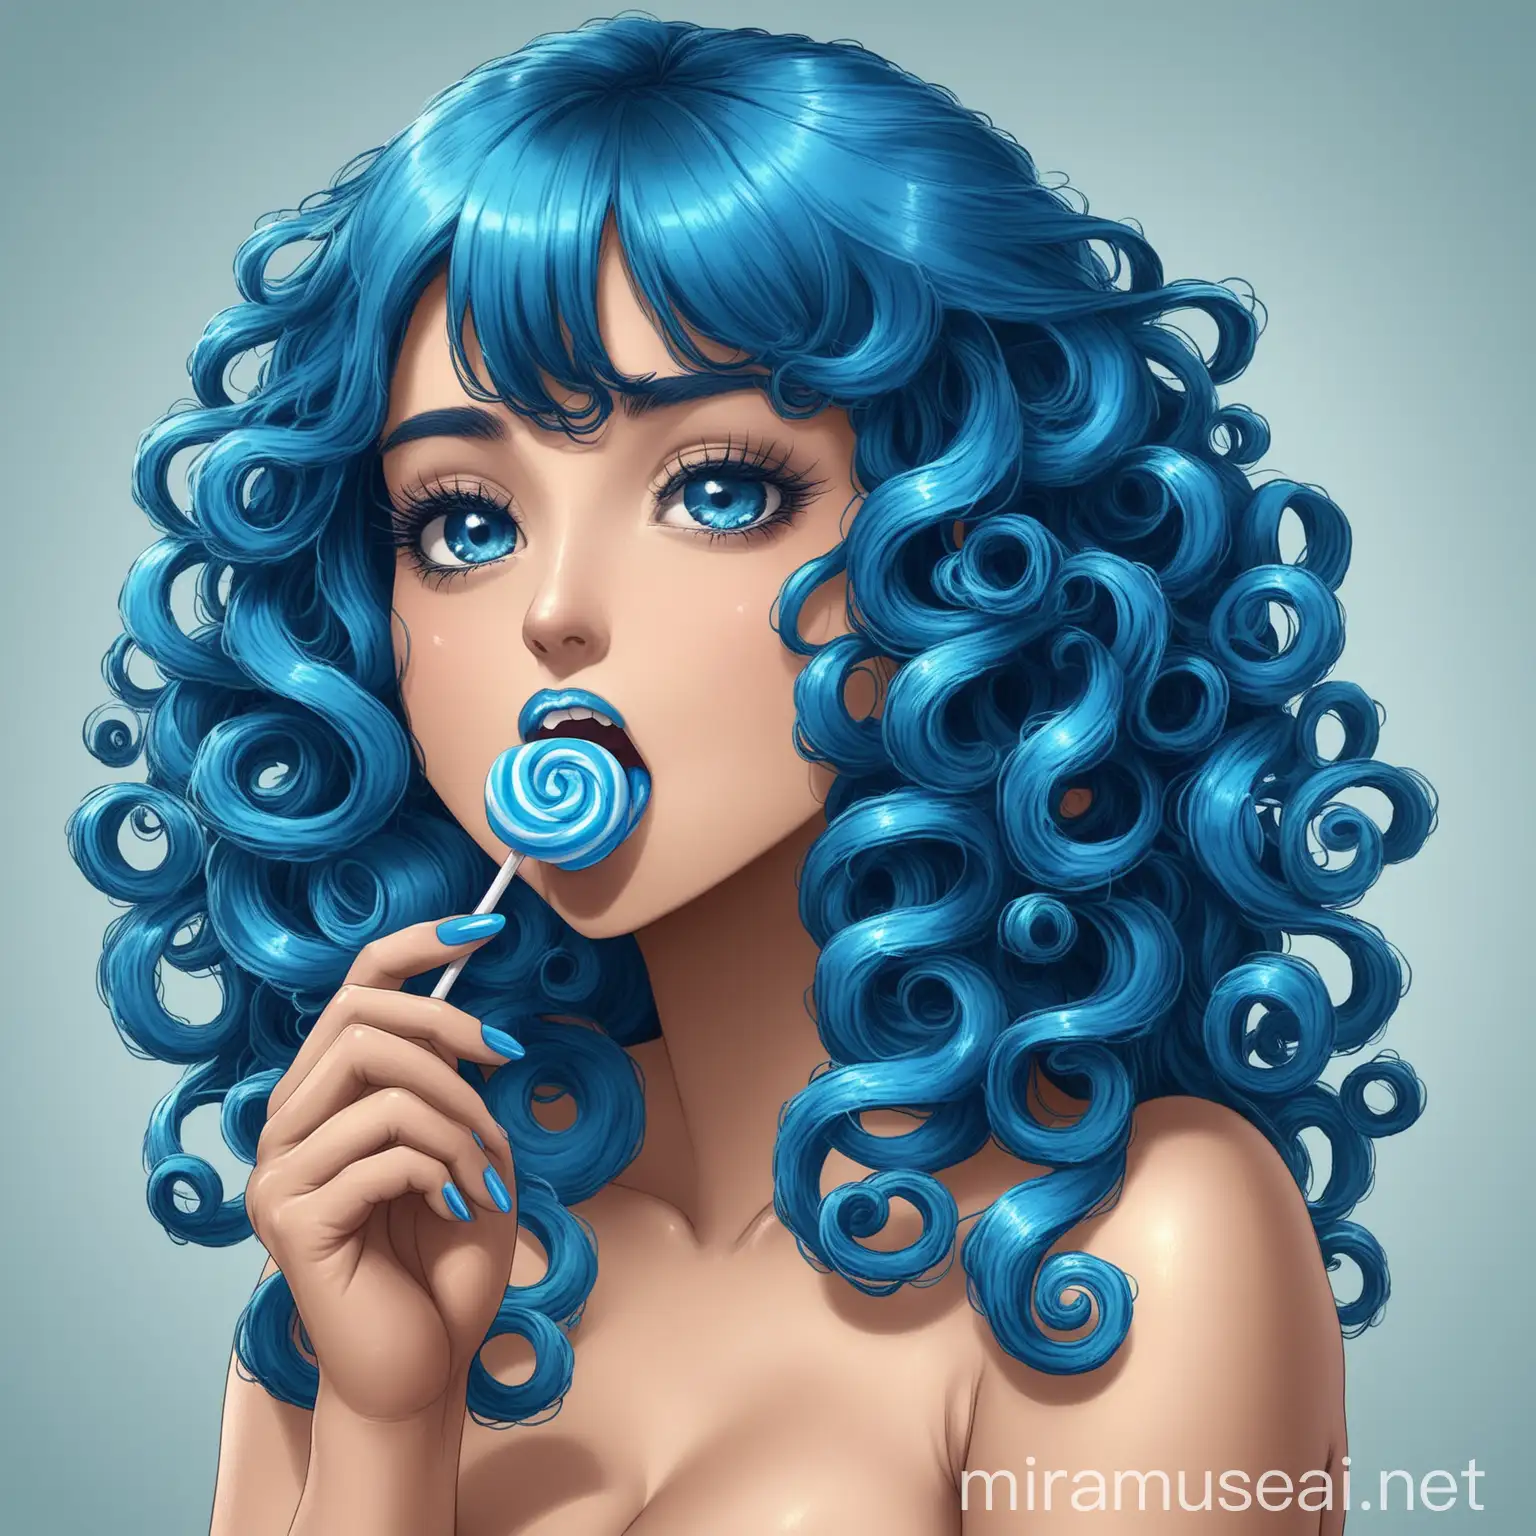 CurlyHaired Latina Enjoying Vibrant Blue Candy